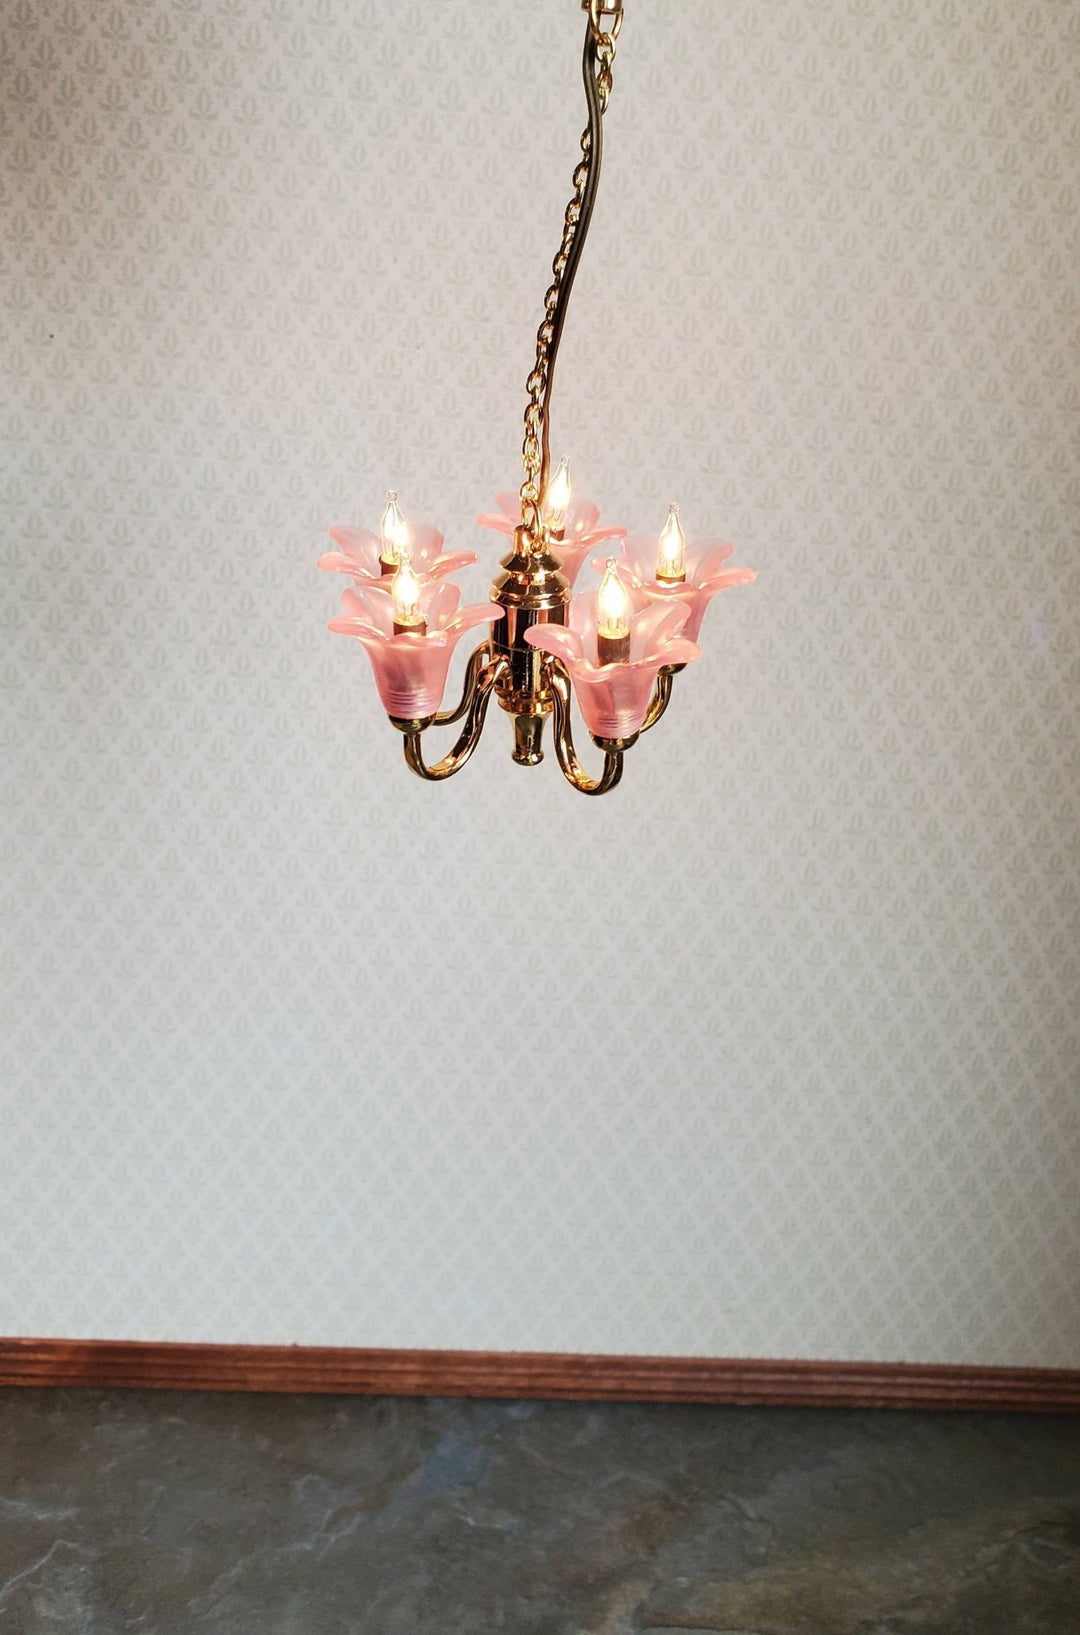 Dollhouse Miniature Chandelier Pink Flowers Light Hanging 5 Arm Electric 1:12 Scale 12 Volt - Miniature Crush